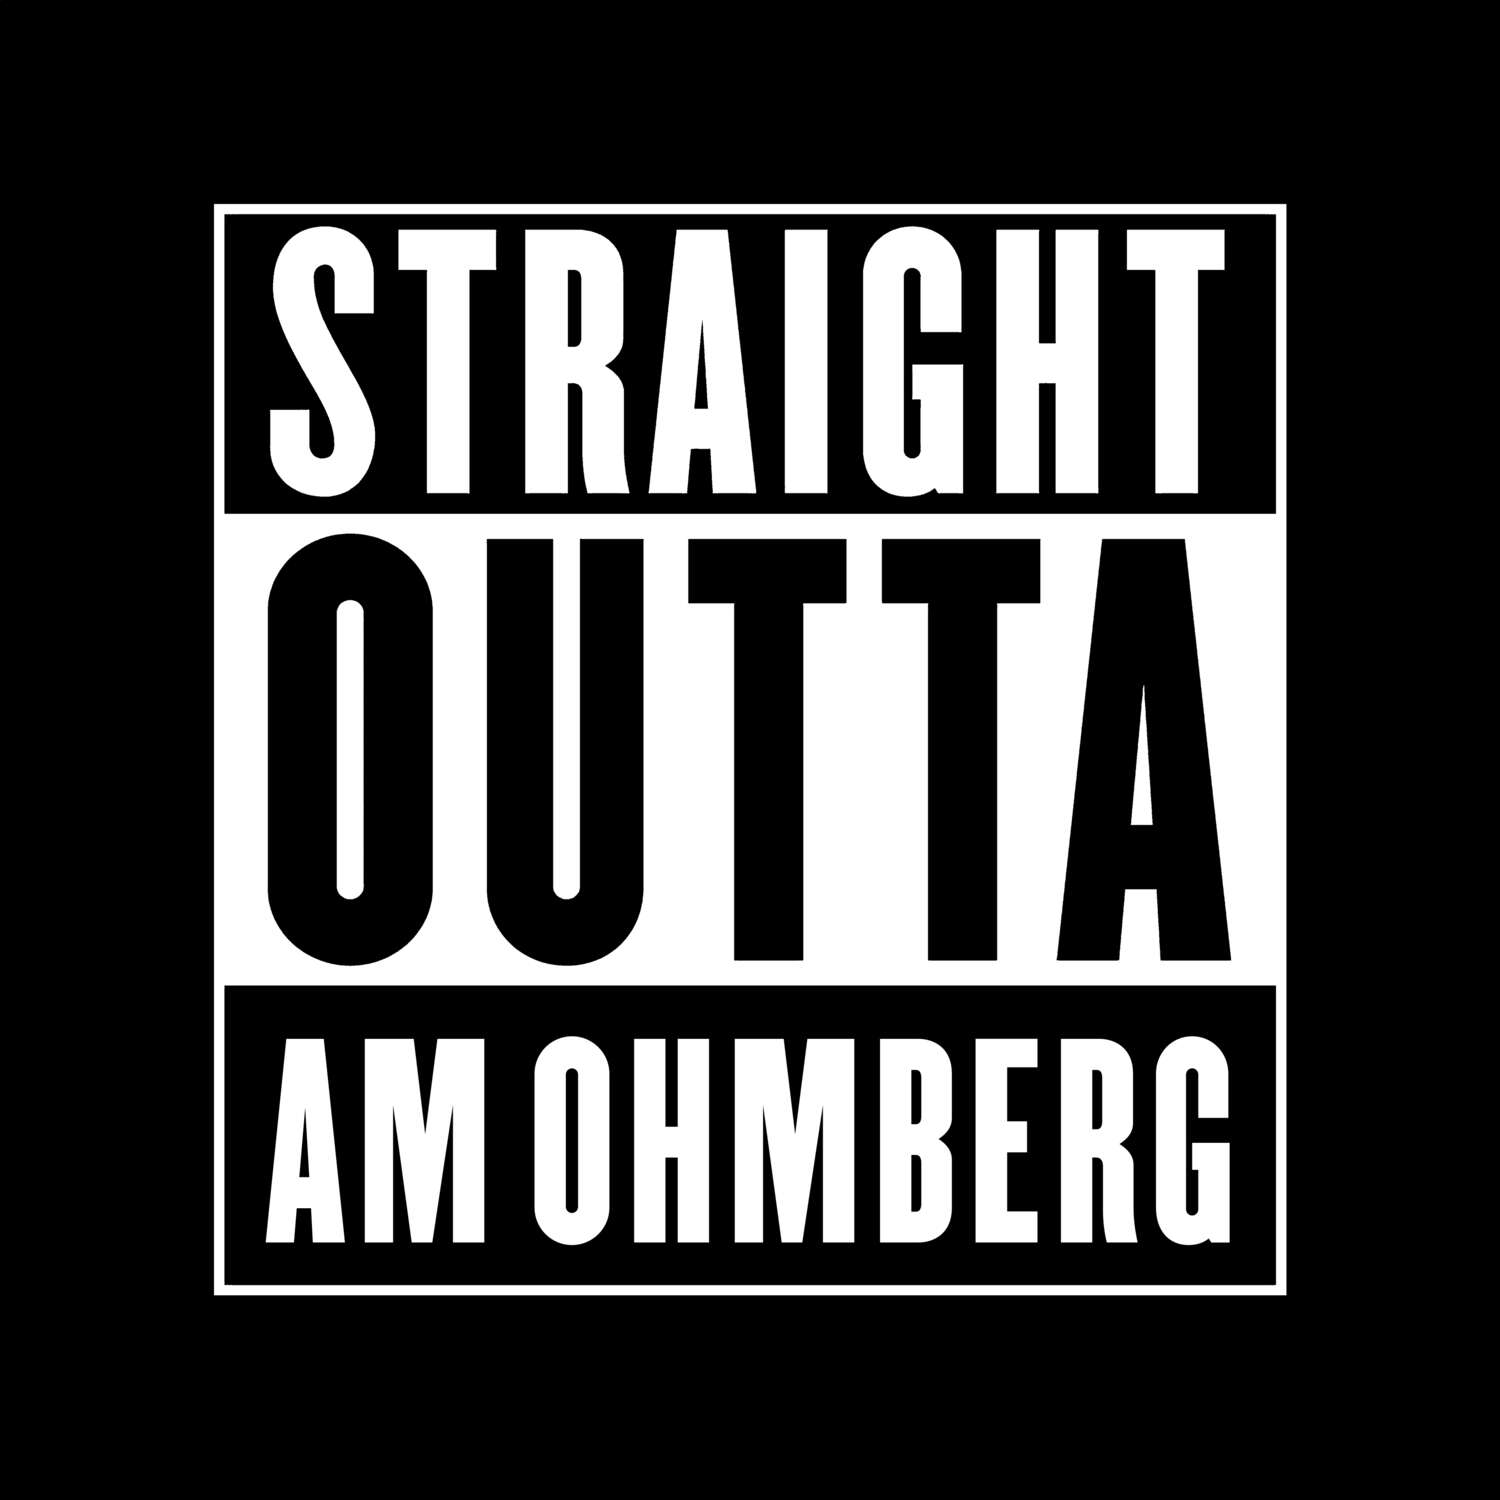 Am Ohmberg T-Shirt »Straight Outta«